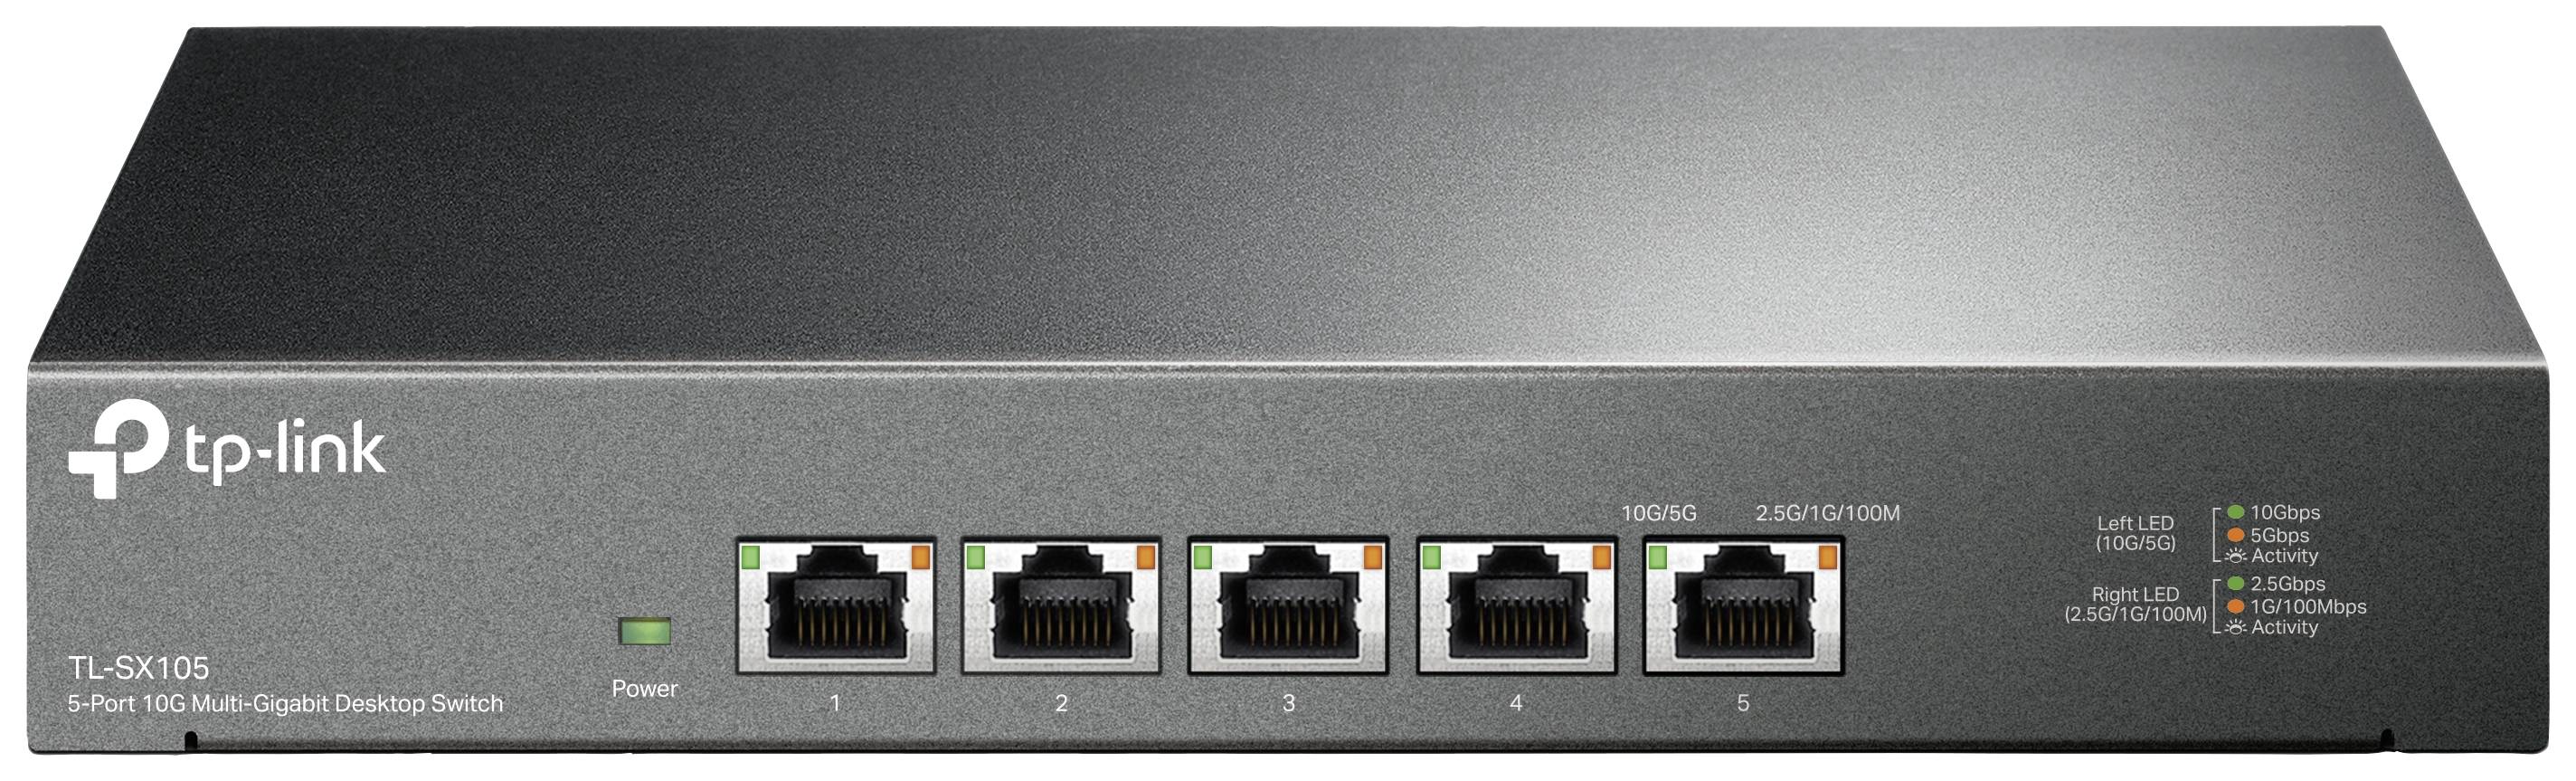 TP-LINK 5-Port 10G Multi-Gigabit Desktop Switch